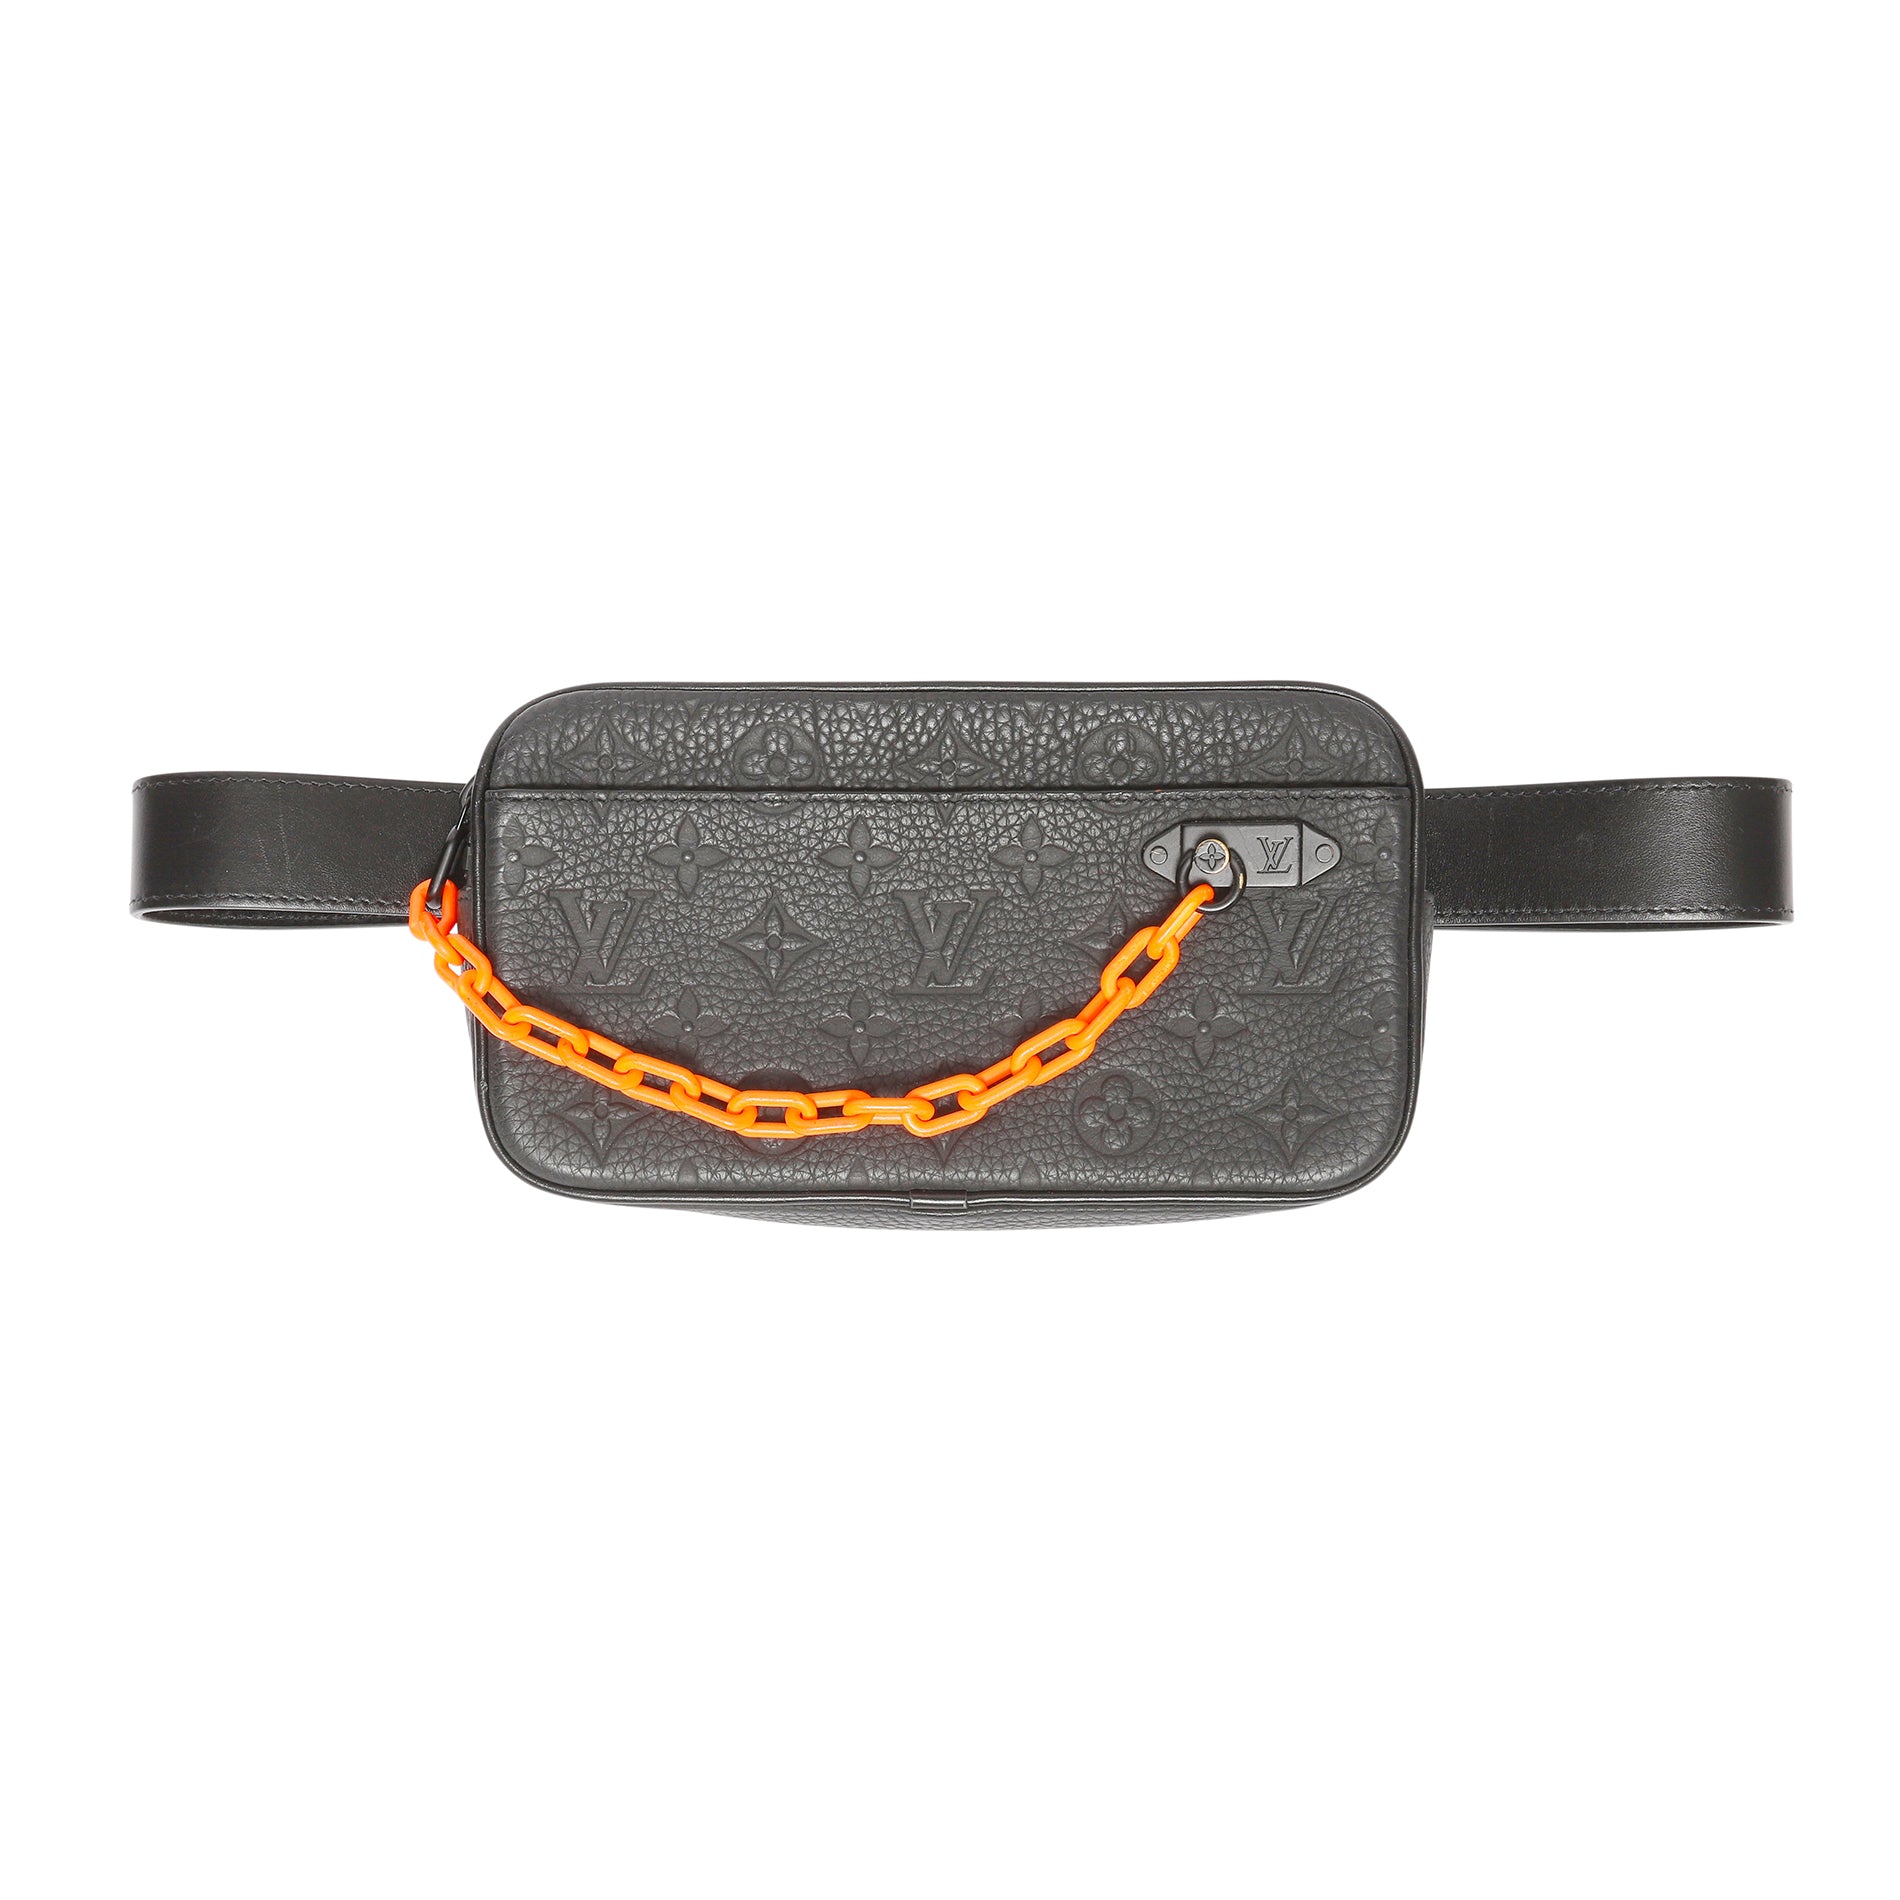 Louis Vuitton lv monogram belt bag funny pack oxidized leather | Bags, Louis  vuitton belt bag, Luxury bags collection